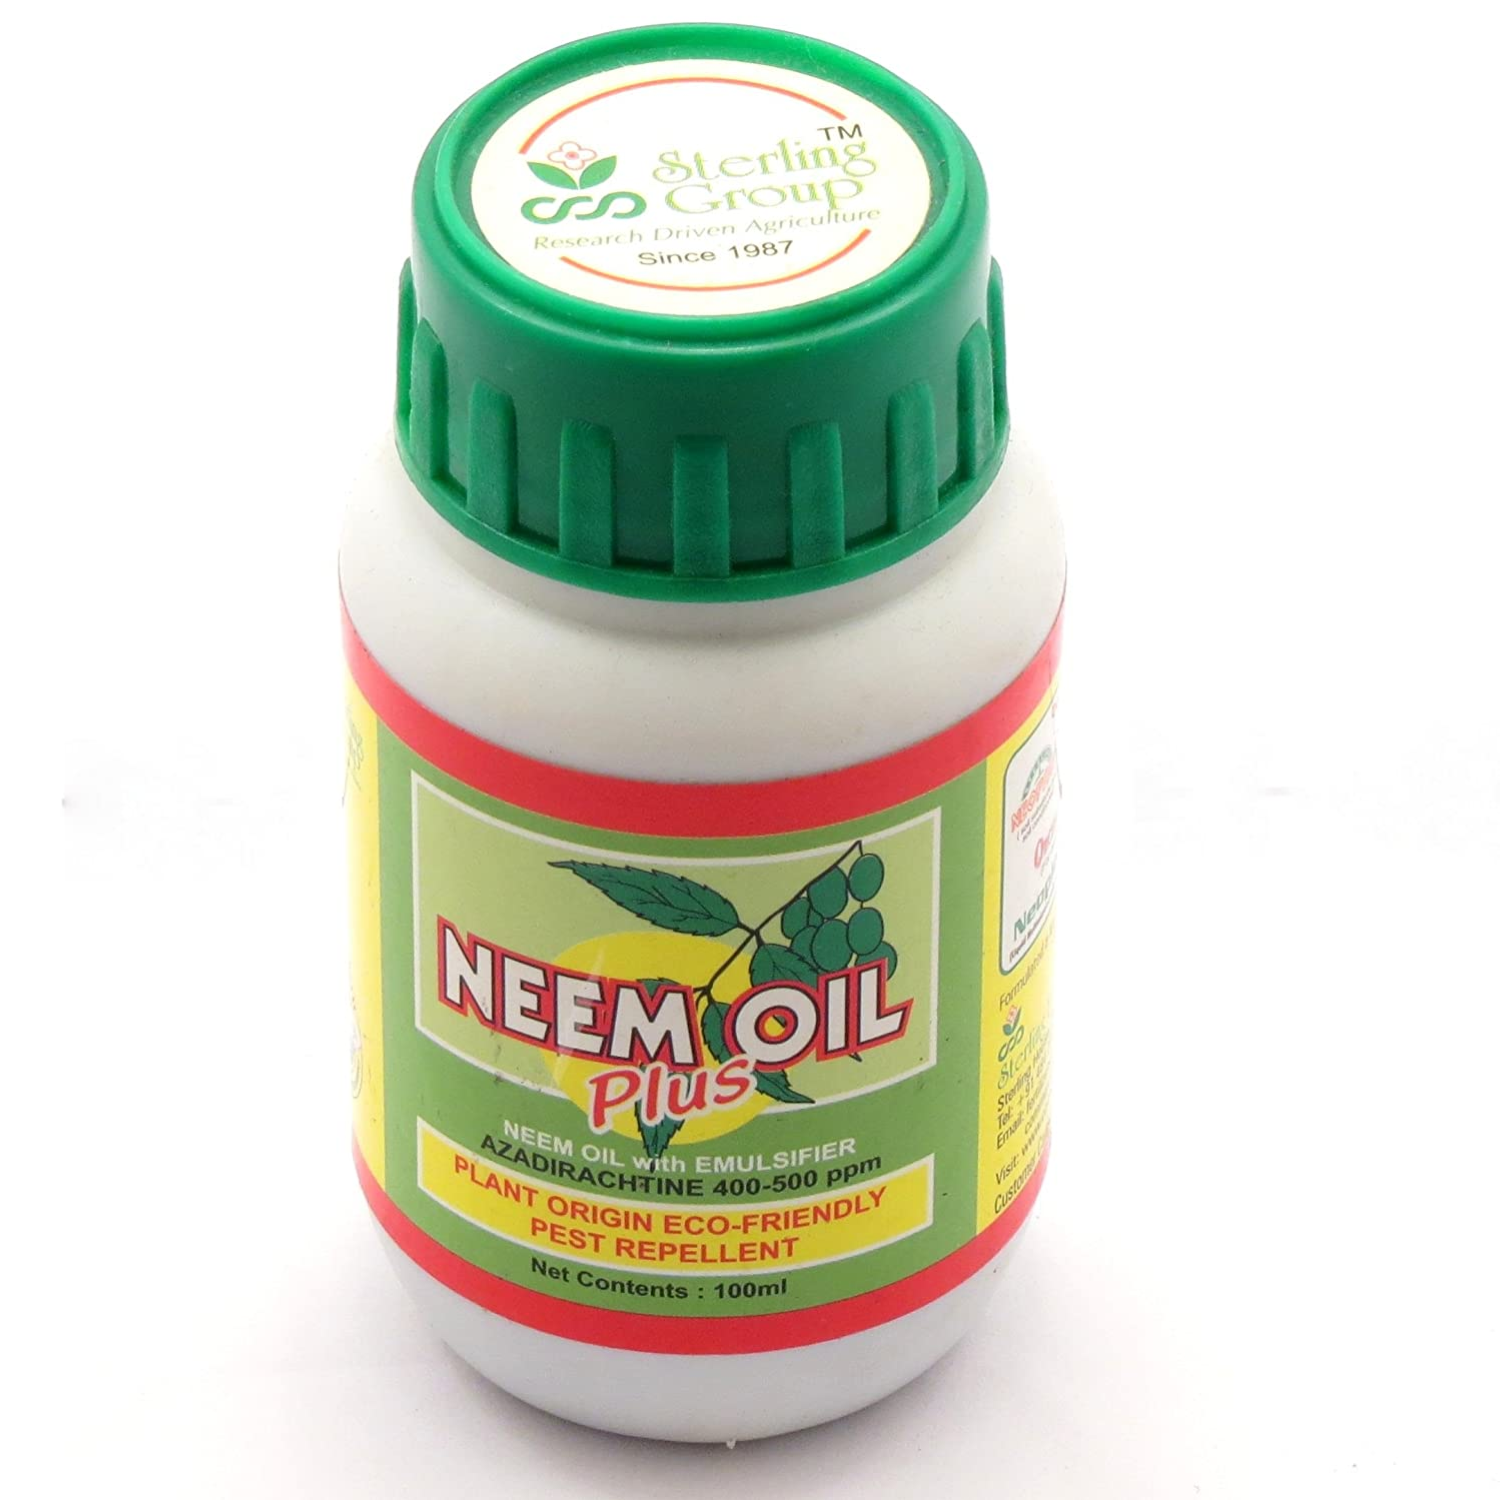 Neem Oil Plus for Plants (100 ml)